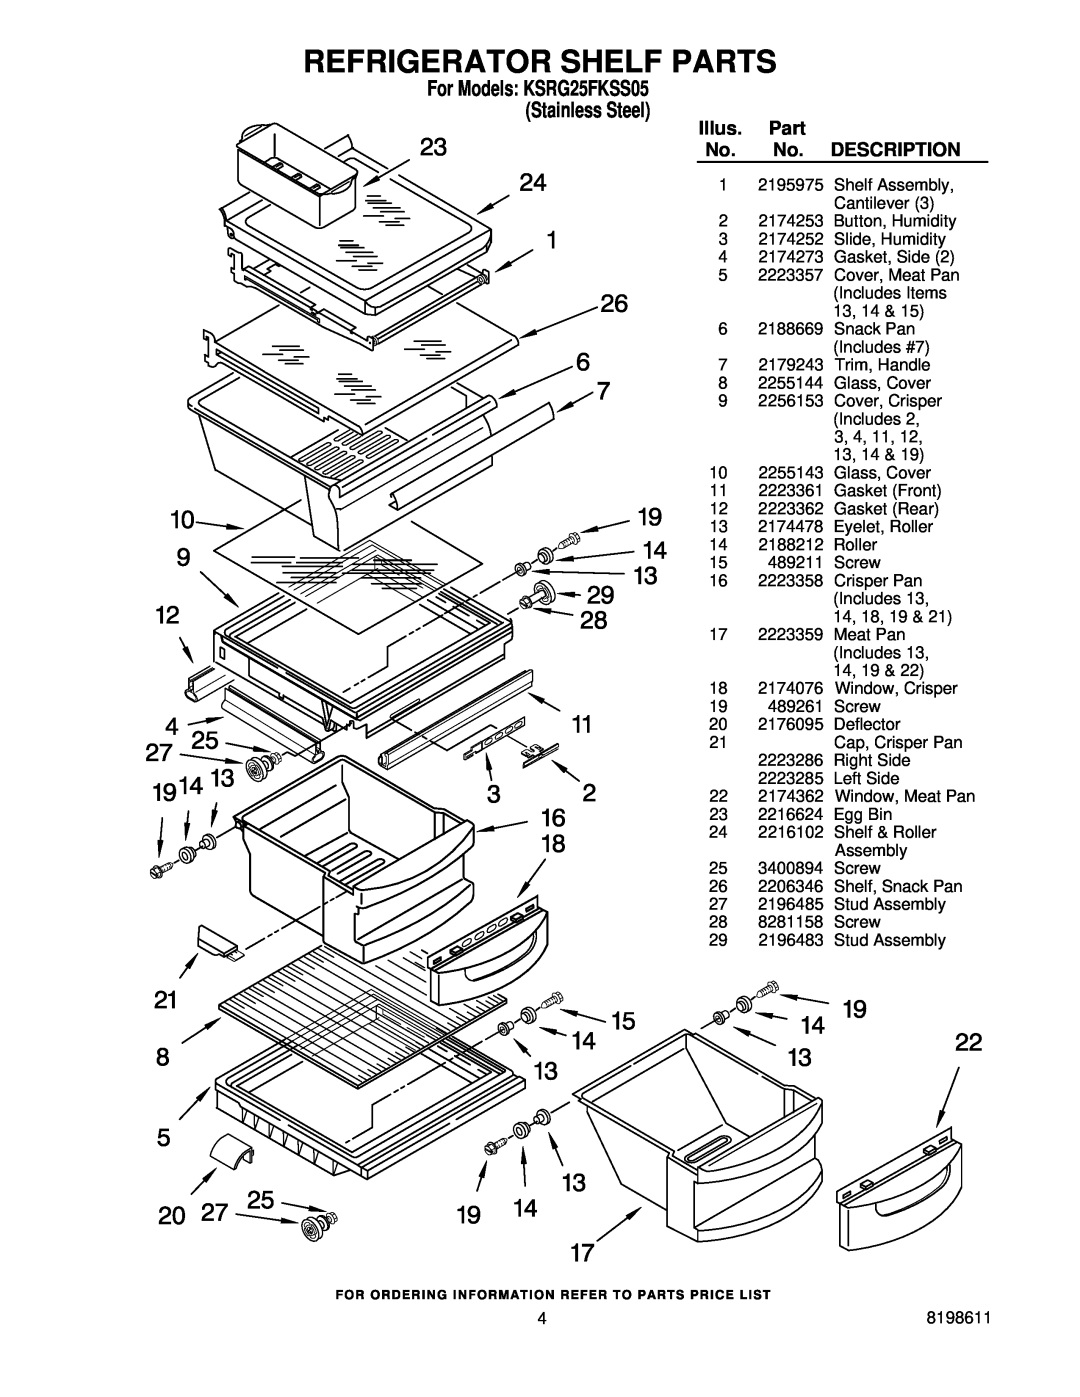 KitchenAid ksrg25fkss05 manual Refrigerator Shelf Parts, For Models KSRG25FKSS05 Stainless Steel, Illus, Description 